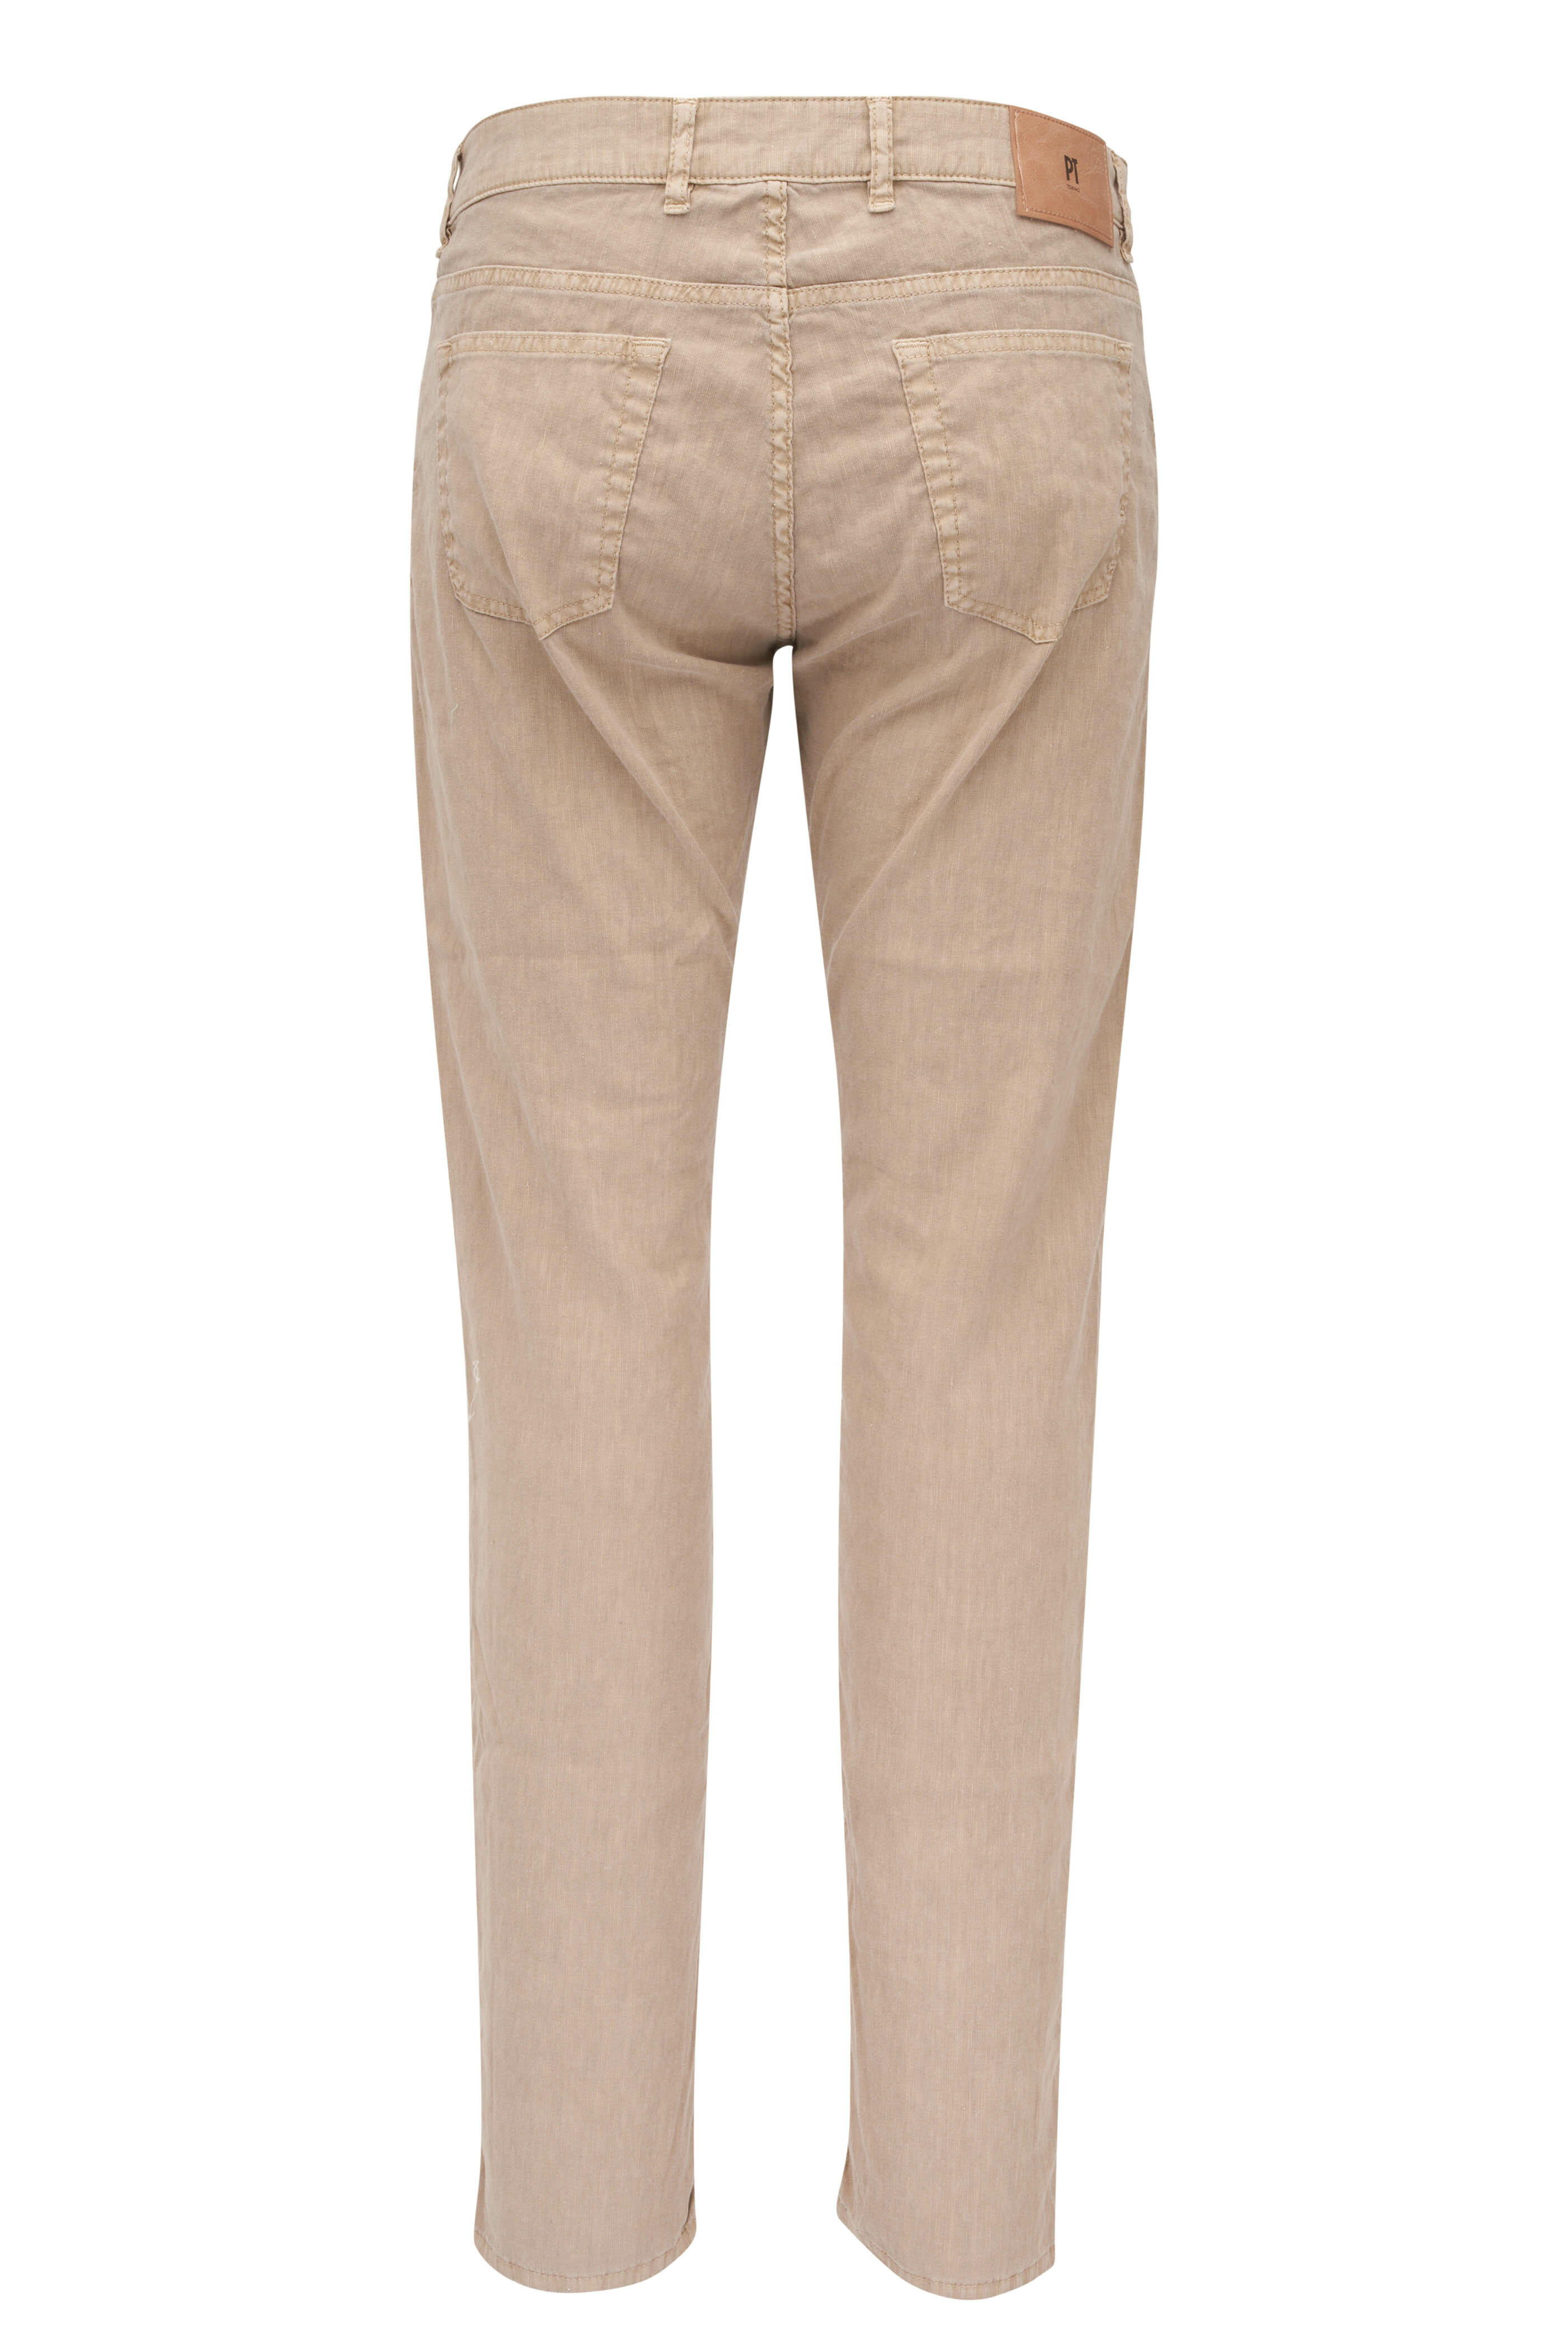 PT Torino - Sand Linen & Cotton Five Pocket Pant